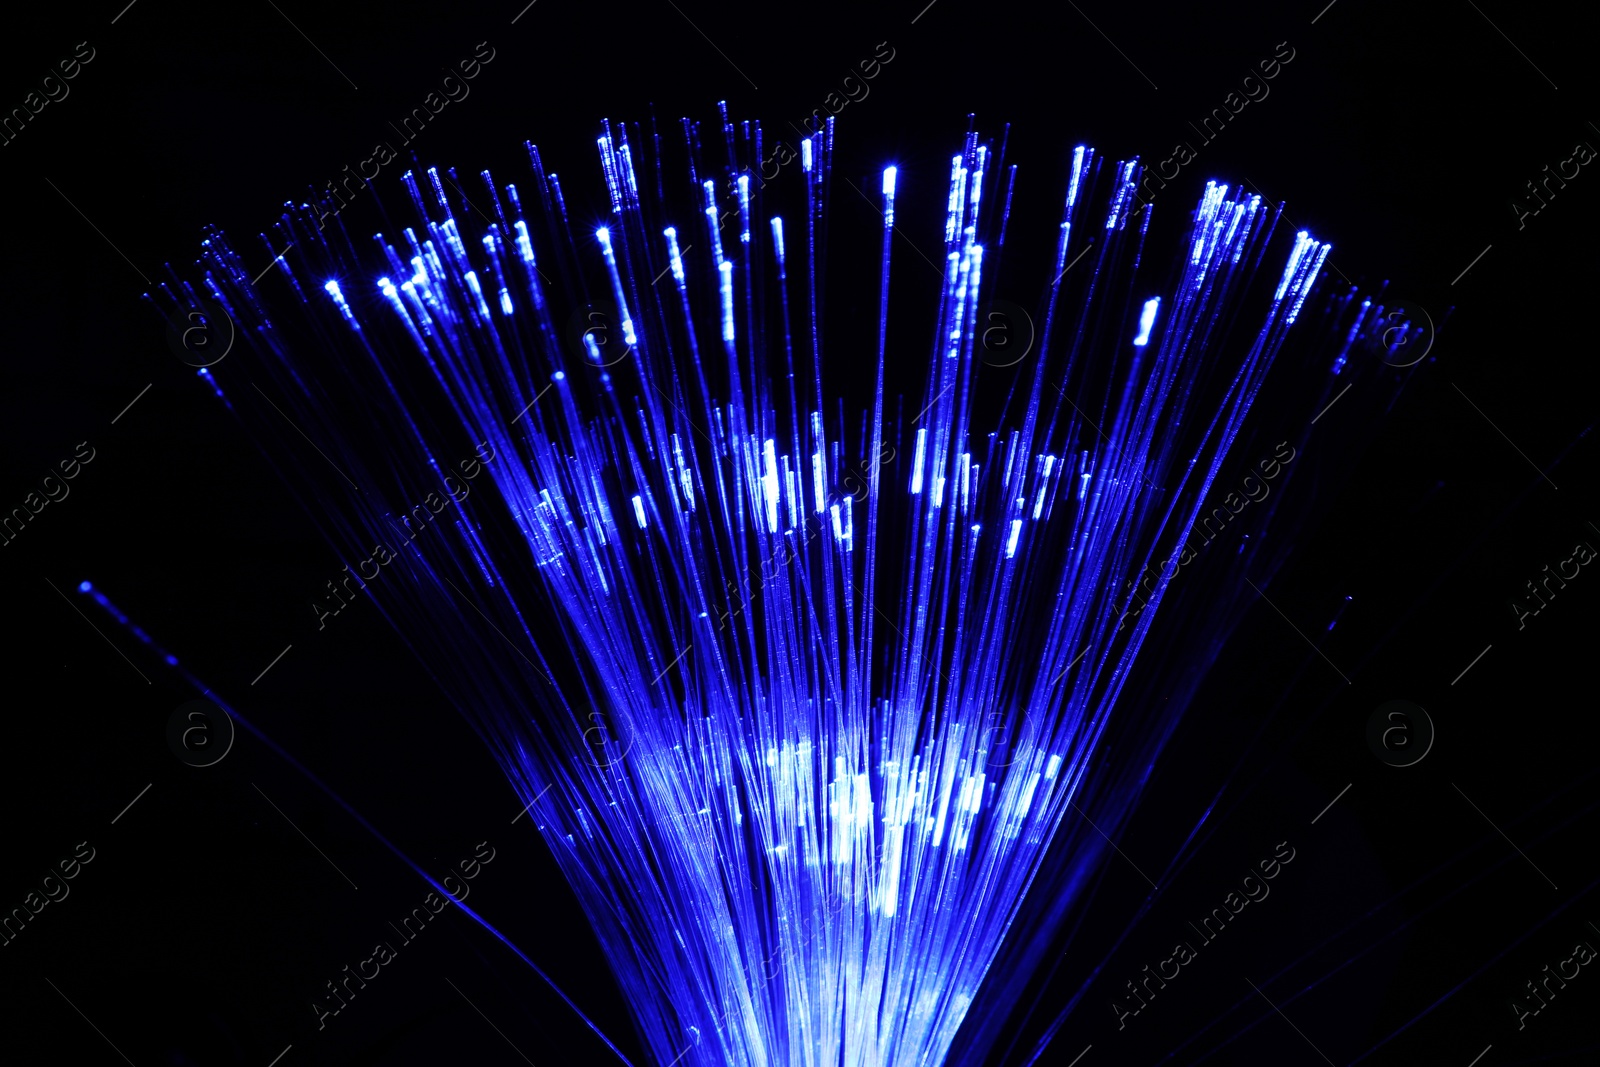 Photo of Optical fiber strands transmitting blue light on black background